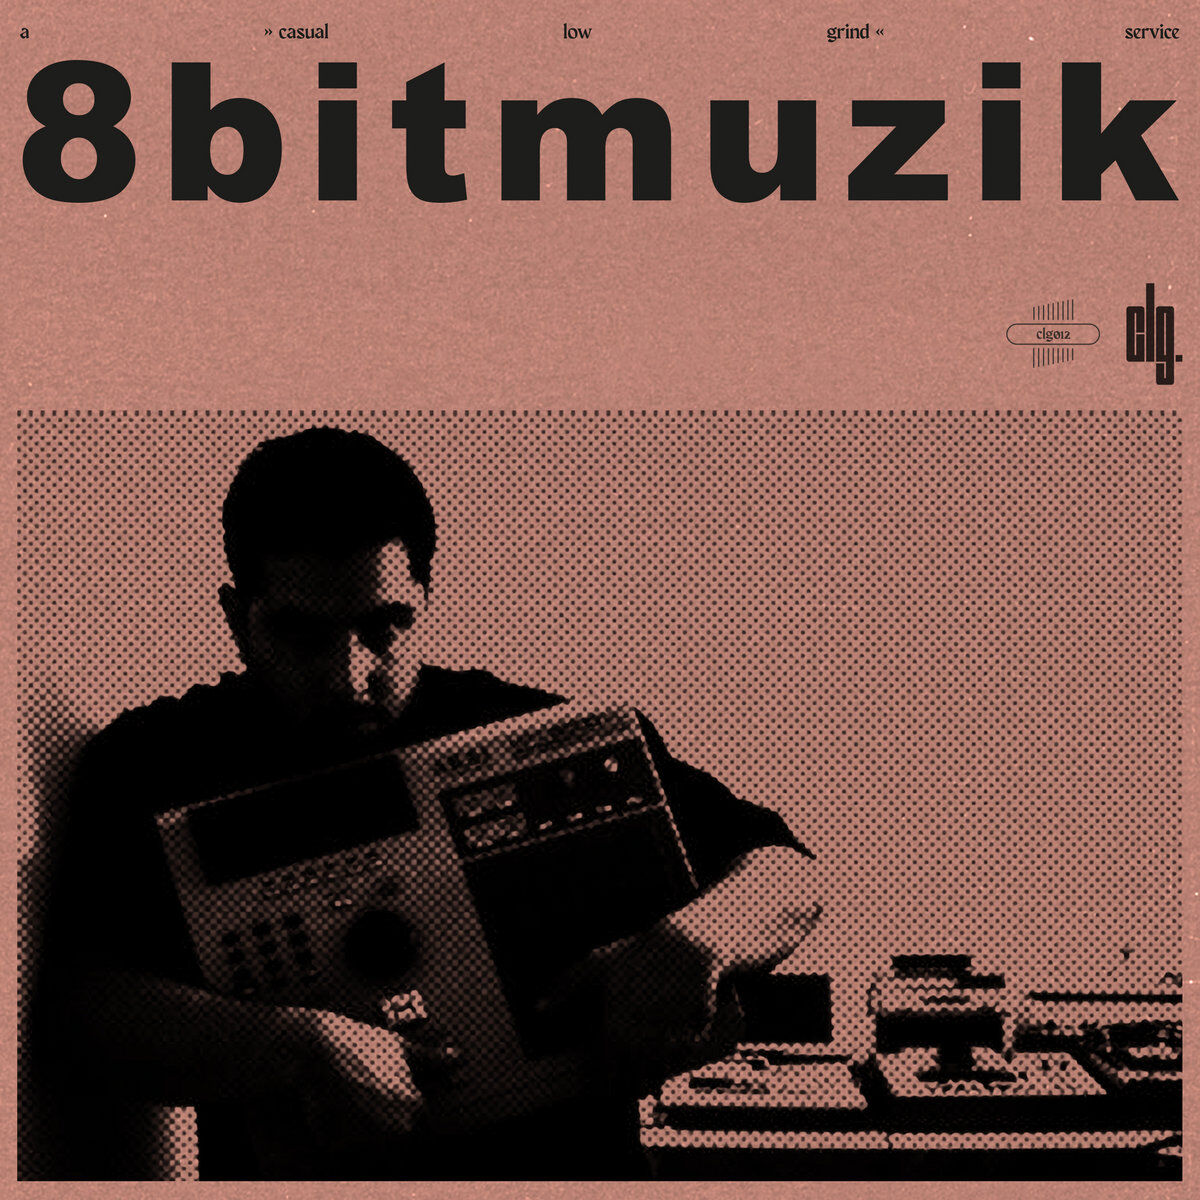 8bit - 8bitmuzik (casual low grind)